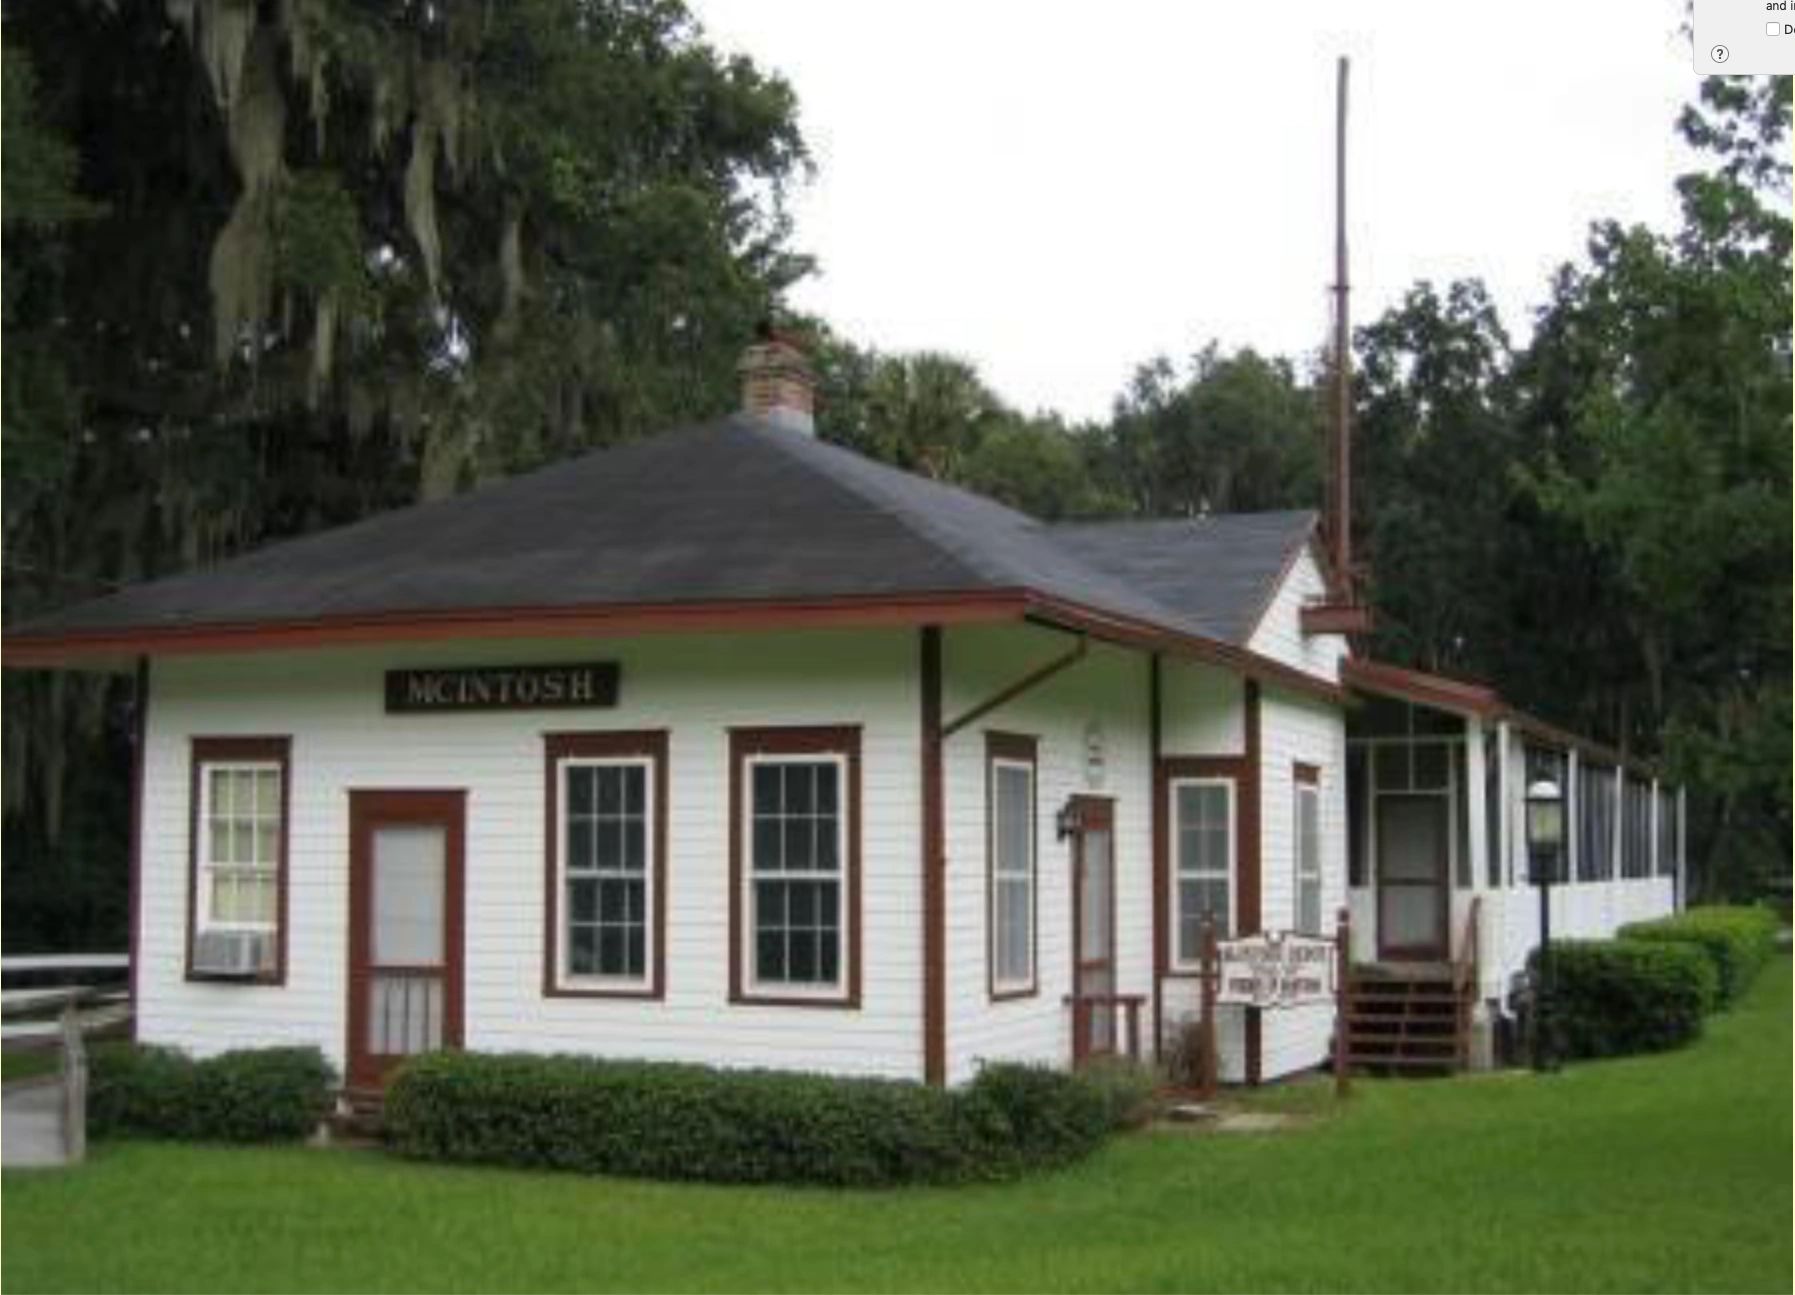 McIntosh's Historic Depot
